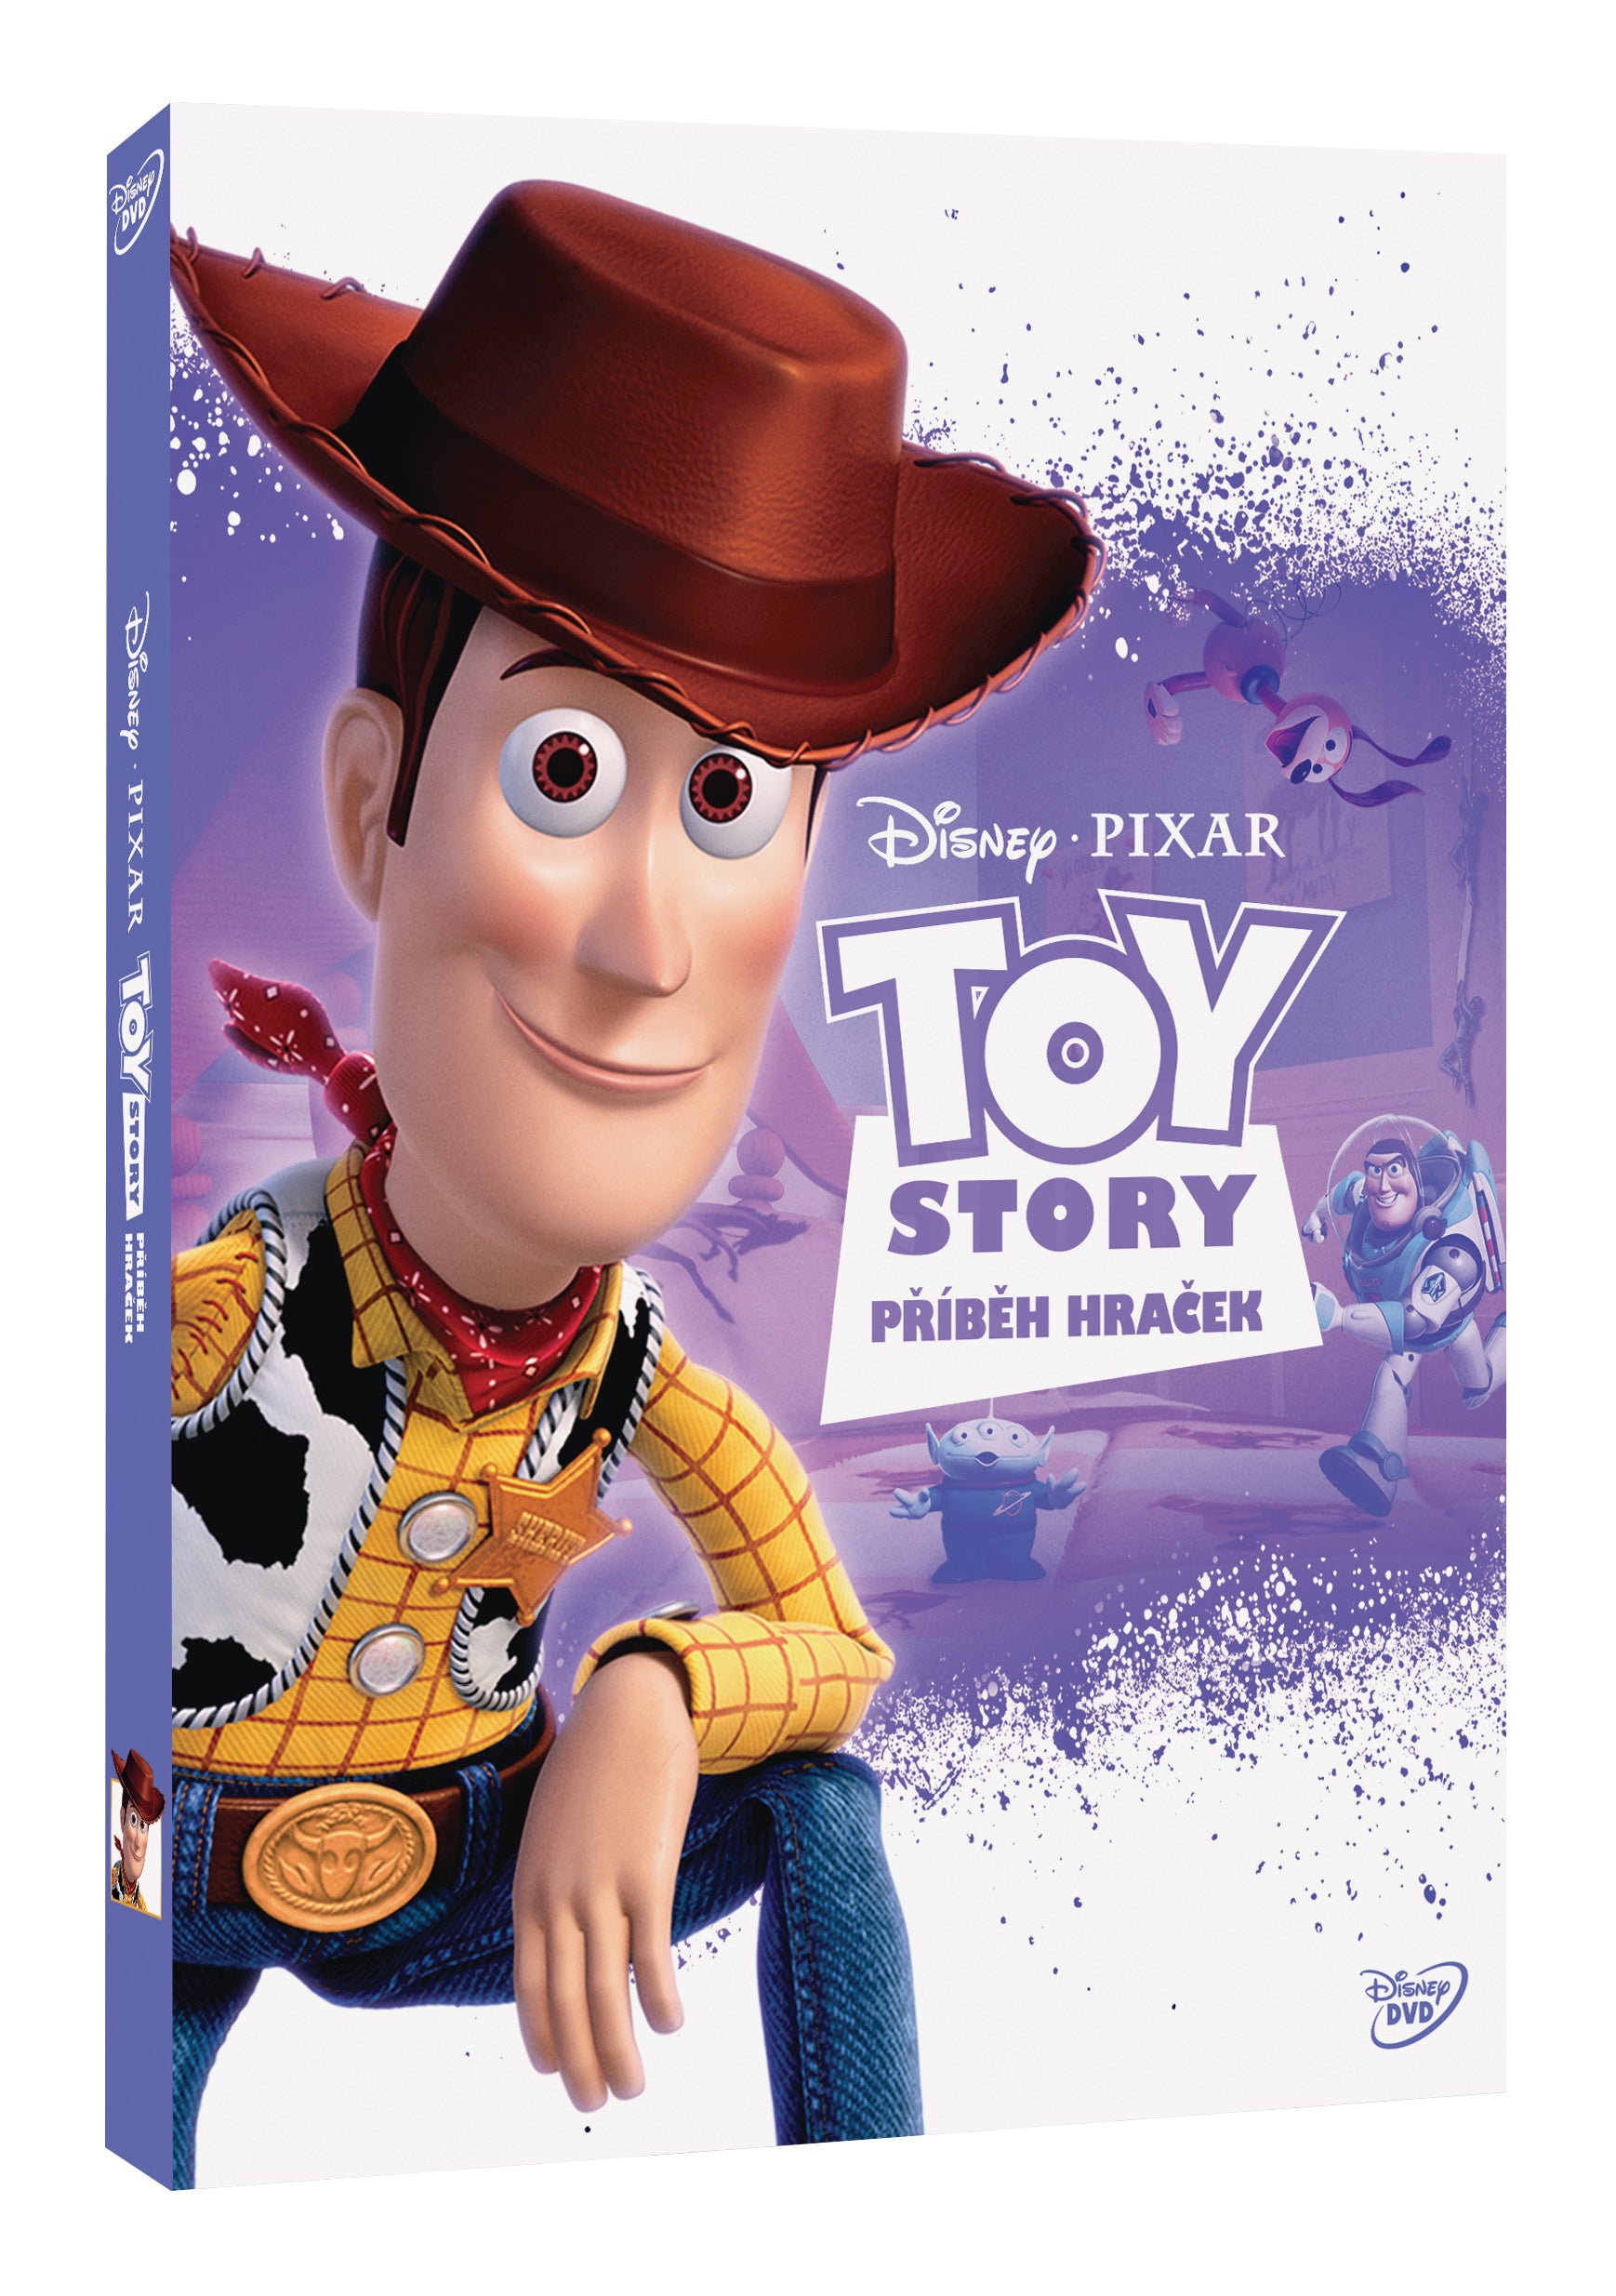 Toy Story: Pribeh hracek SE DVD – Edice Pixar New Line / Toy Story Special Edition